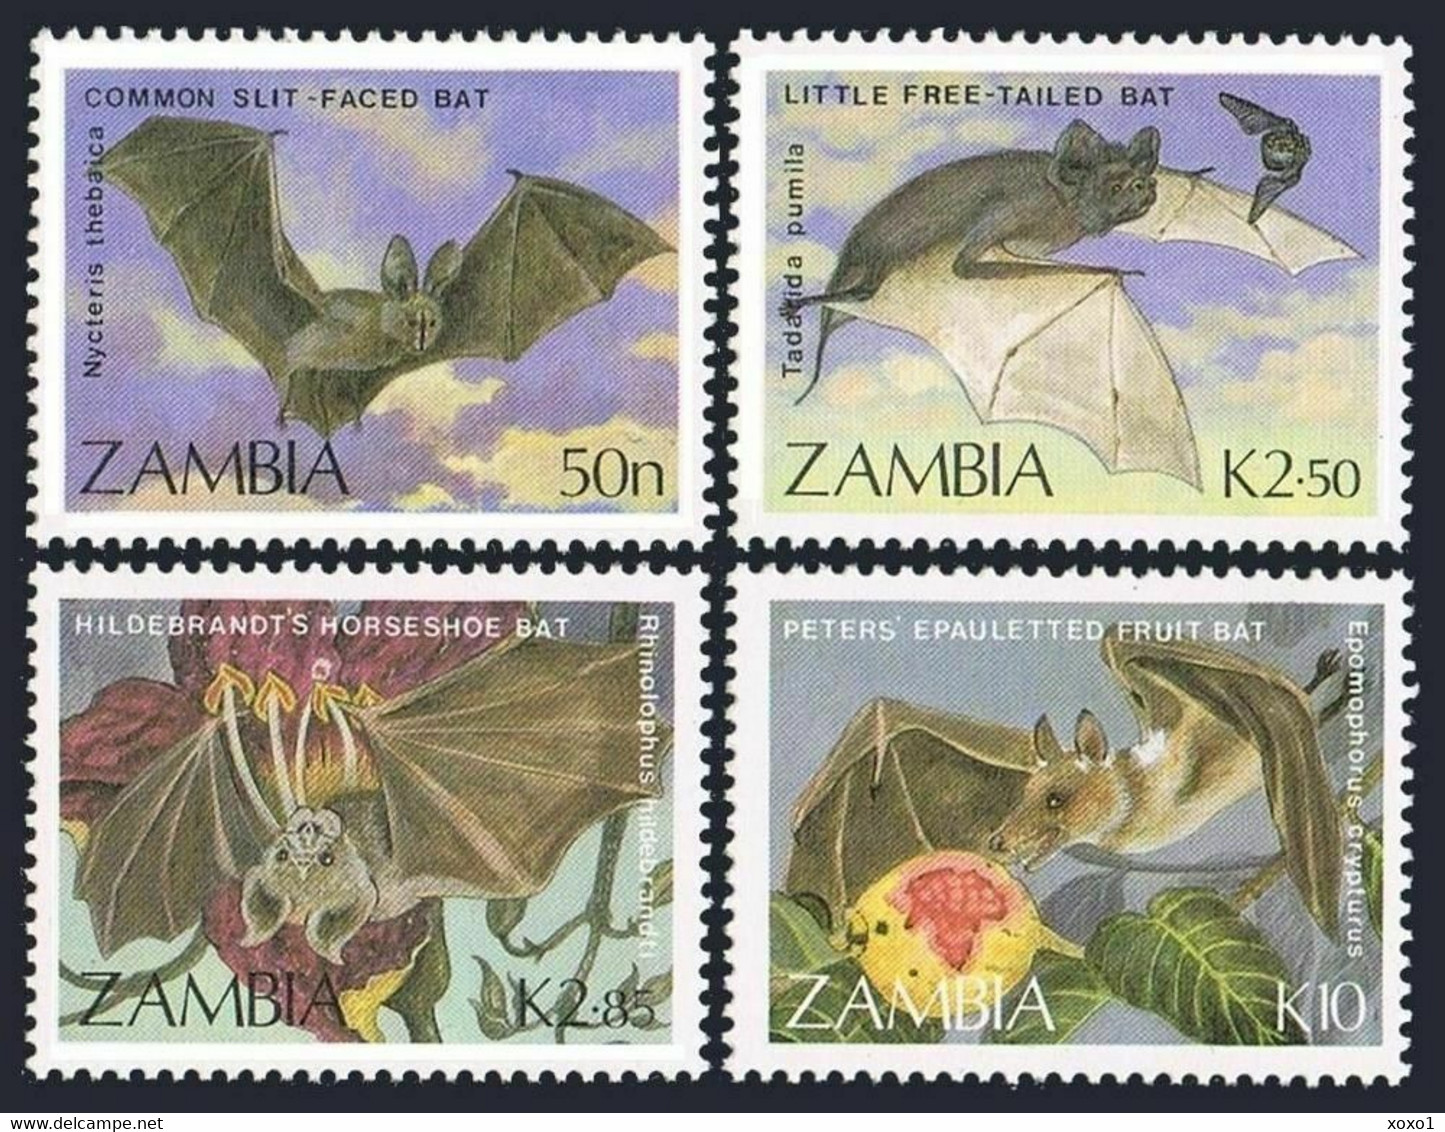 ZAMBIA 1989 MiNr. 474 - 477  Sambia Bats 4v MNH** 6,00 € - Chauve-souris